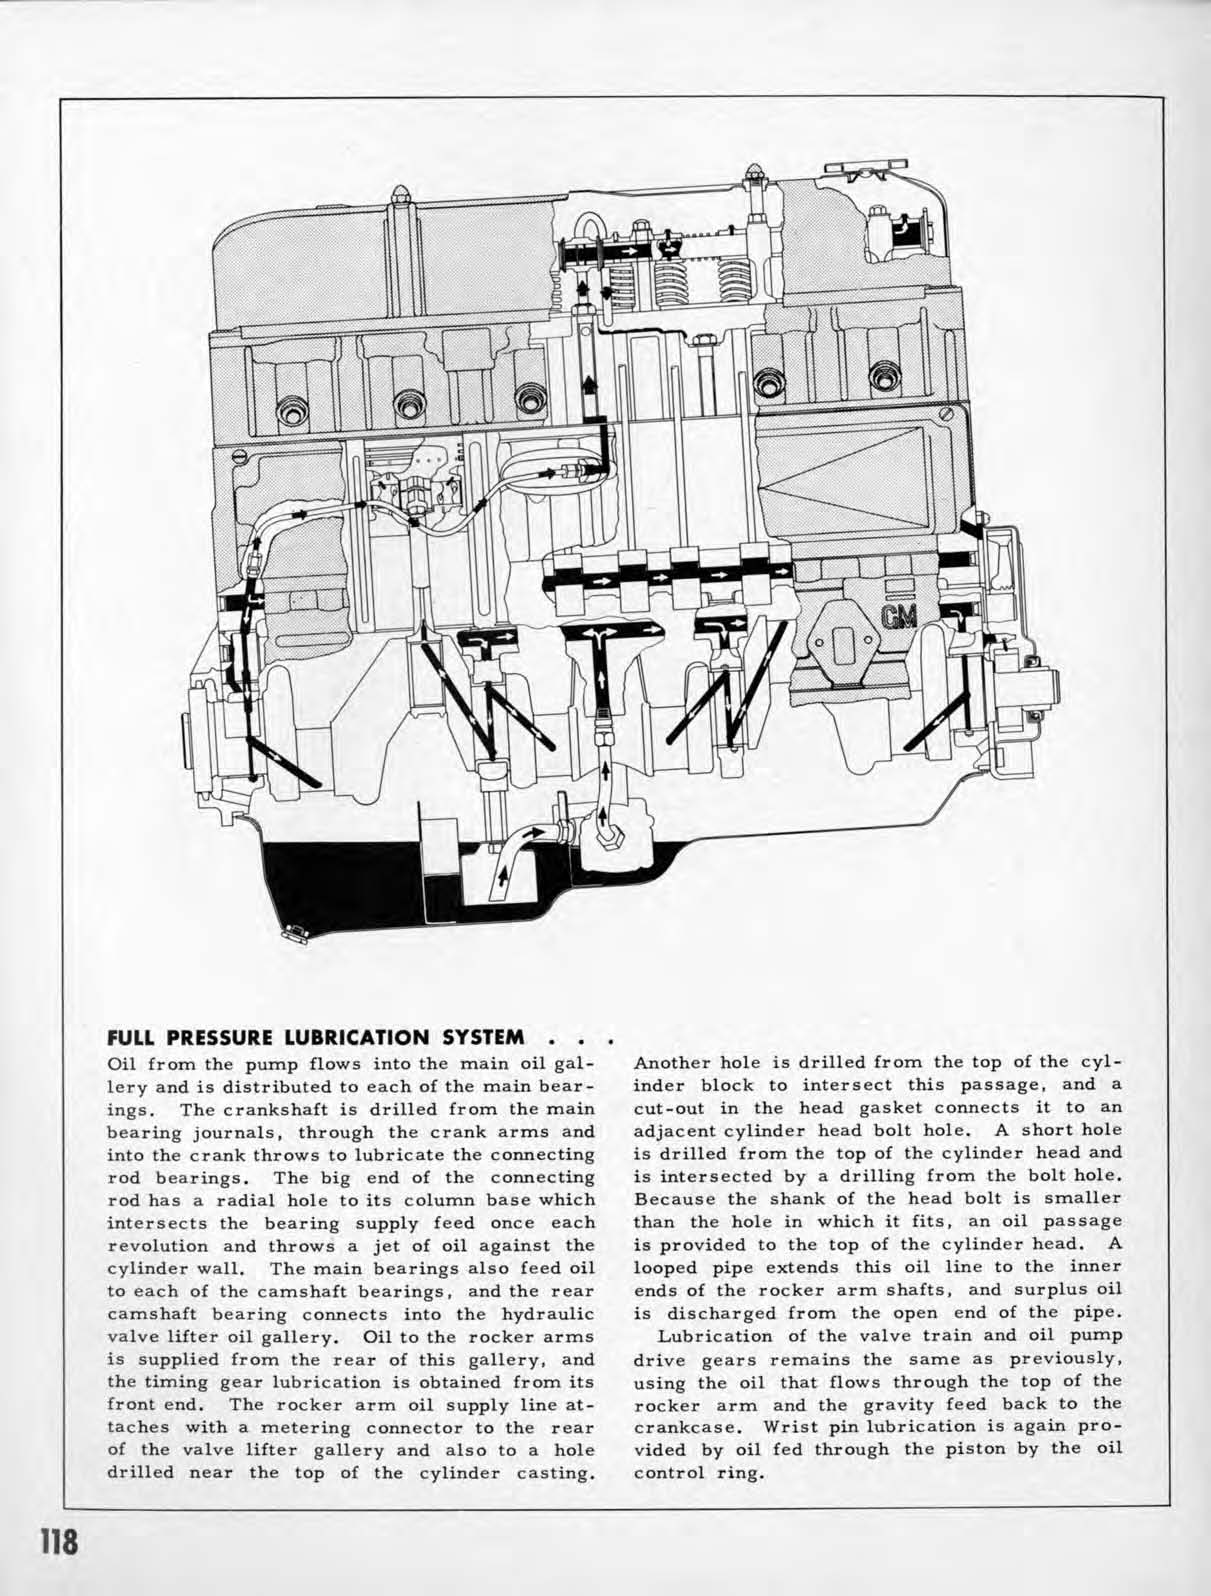 1953_Chevrolet_Engineering_Features-118